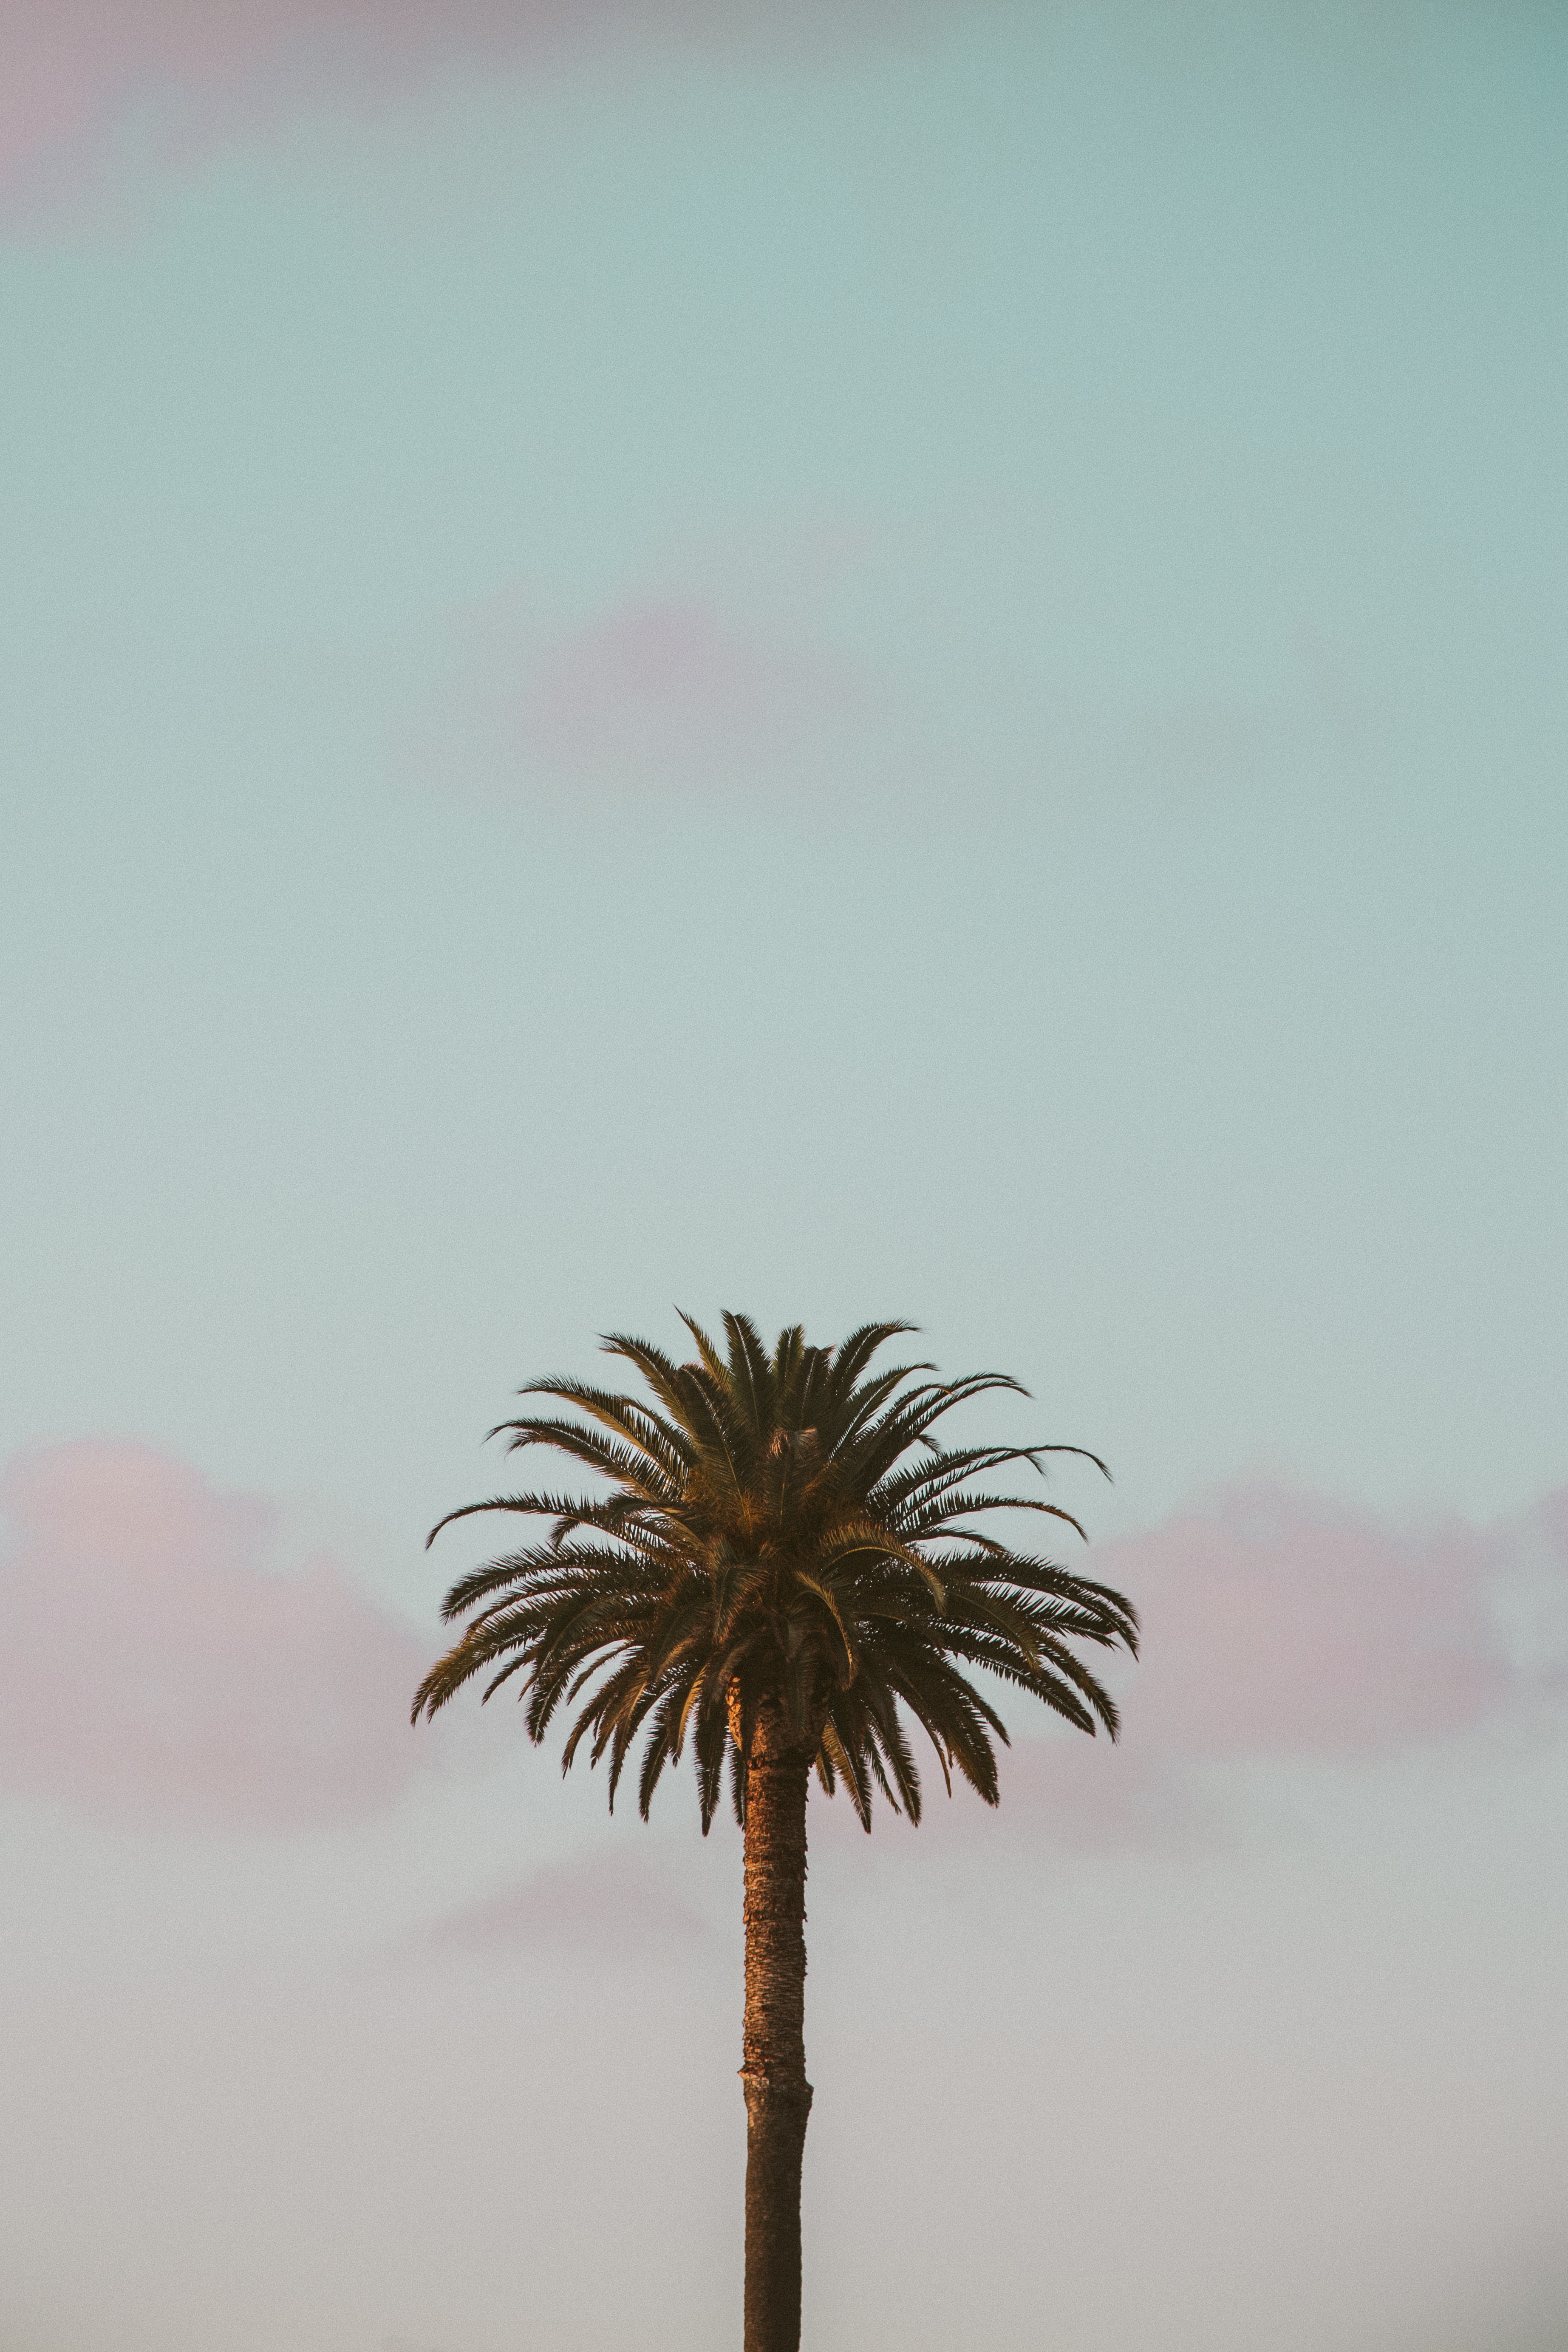 minimalism, tropics, sky Image for desktop